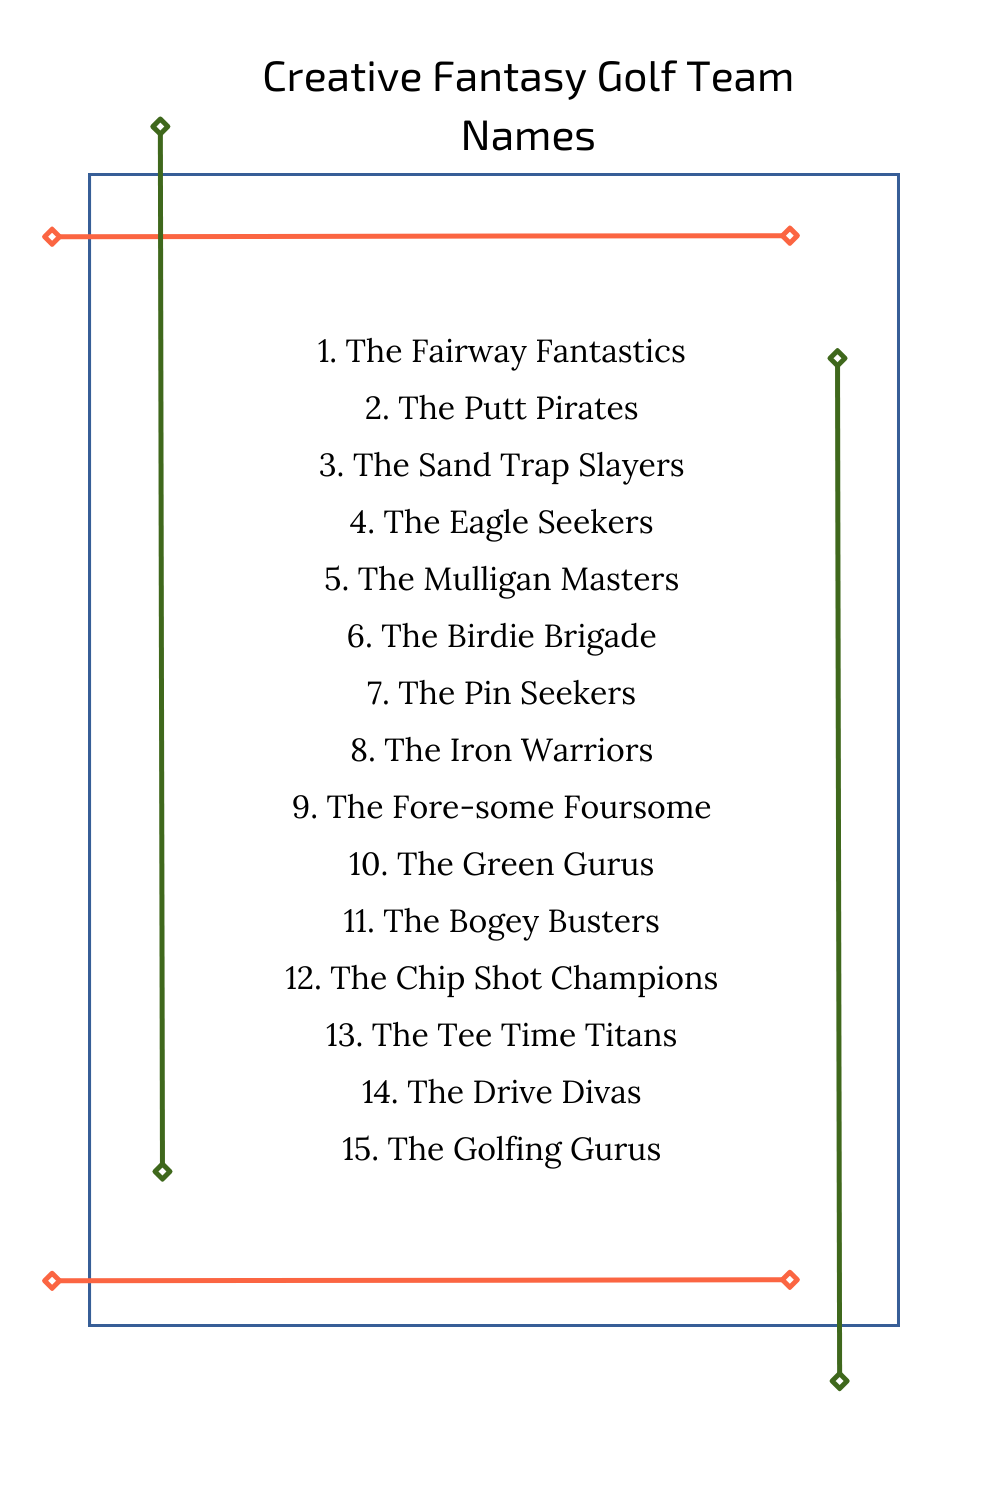 Creative Fantasy Golf Team Names